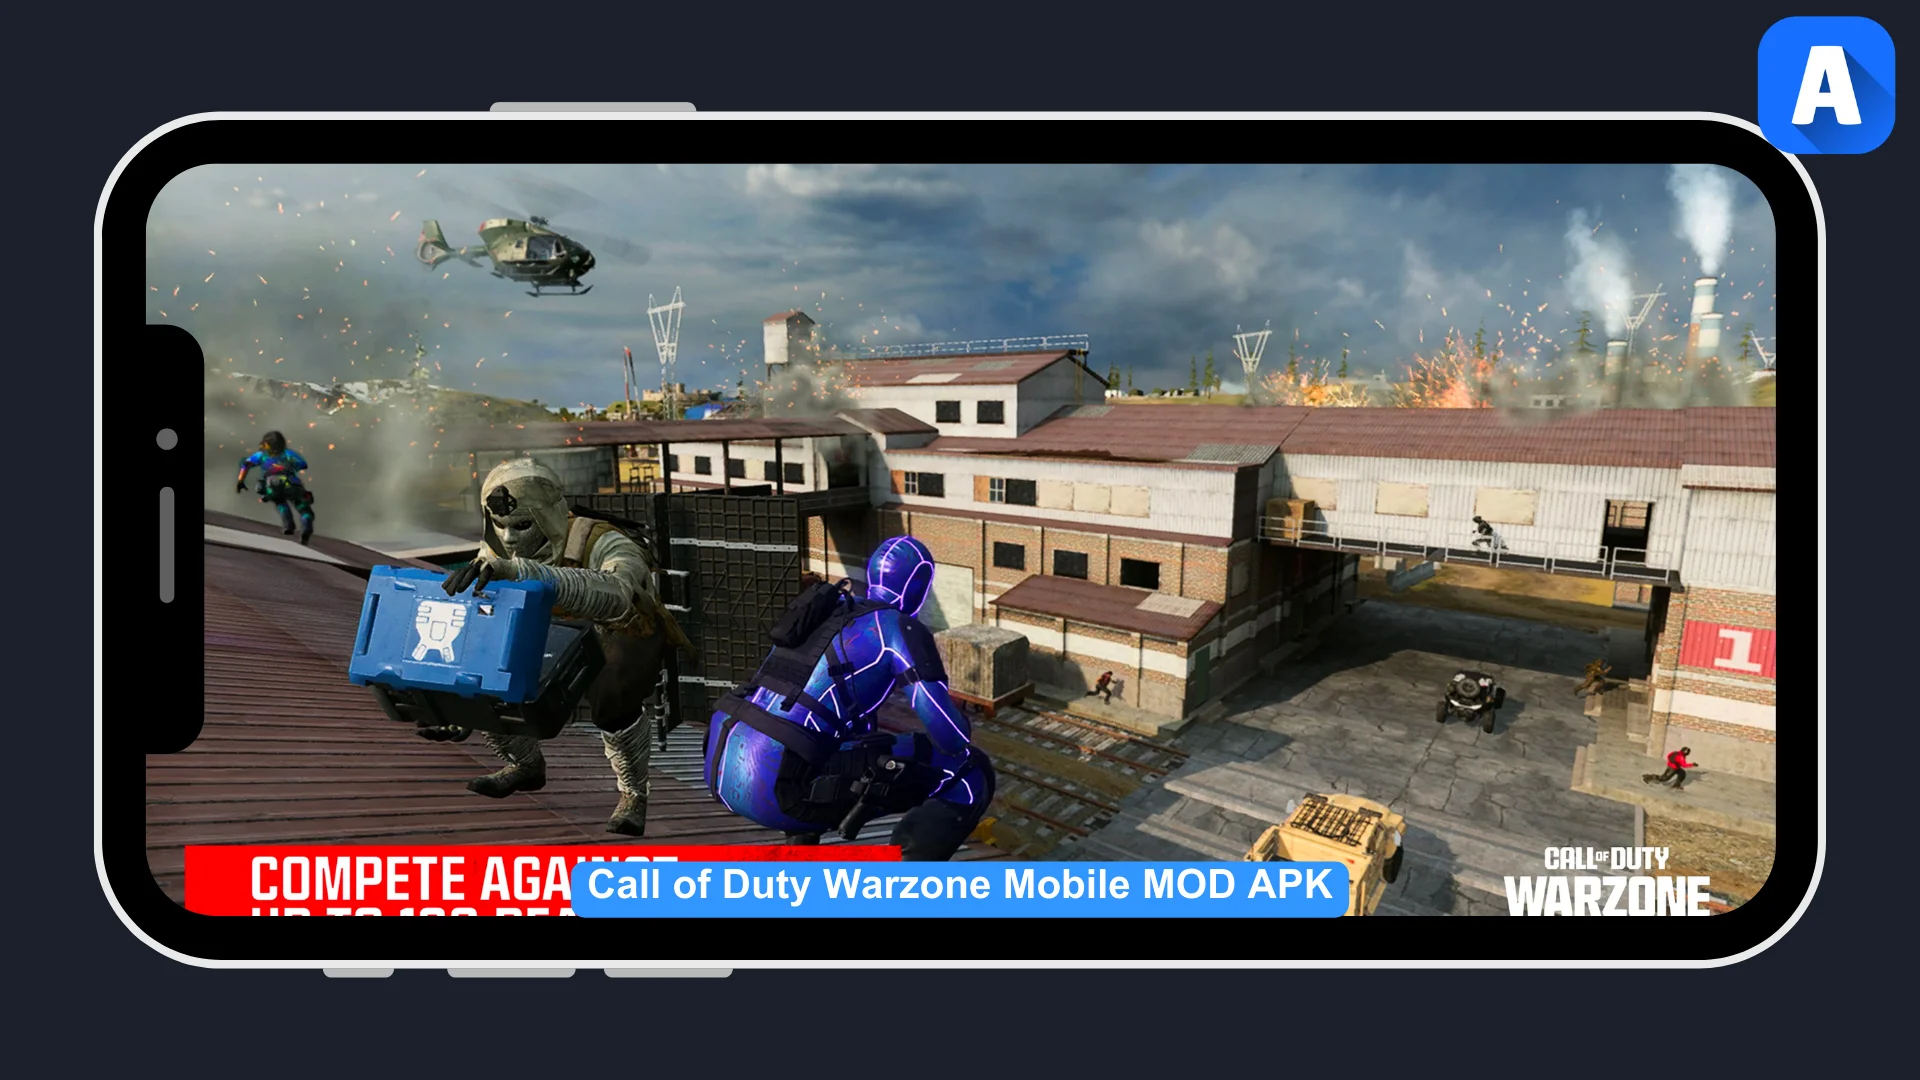 Call of Duty Warzone Mobile MOD APK Screenshot 3